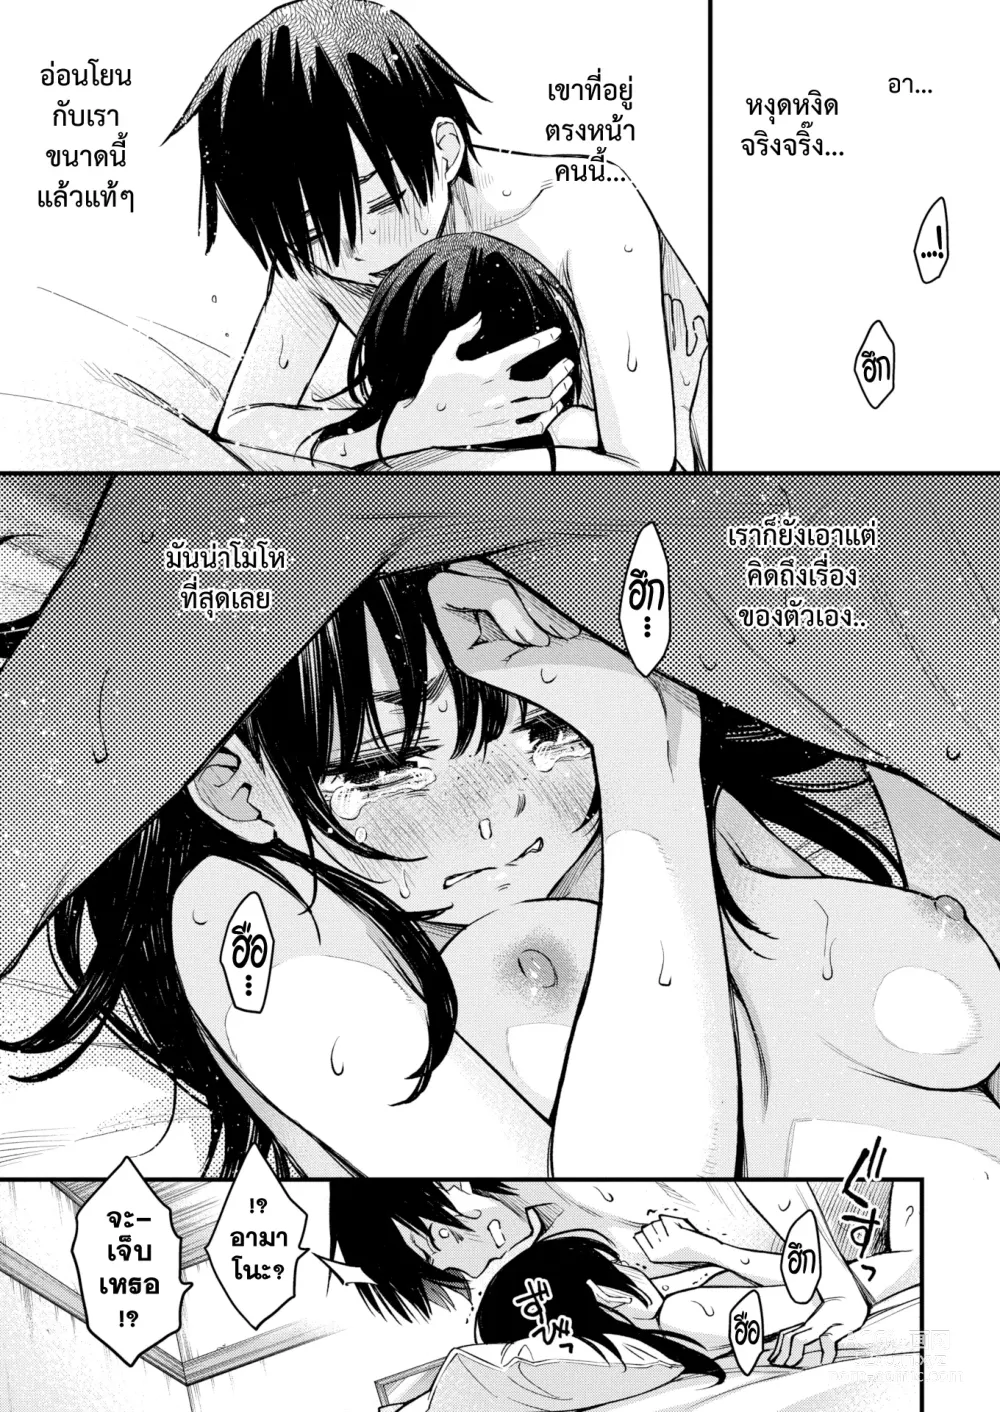 Page 17 of manga เพลงรักของคนหม่น #2 -บทอามาโนะ ยุยกะ-